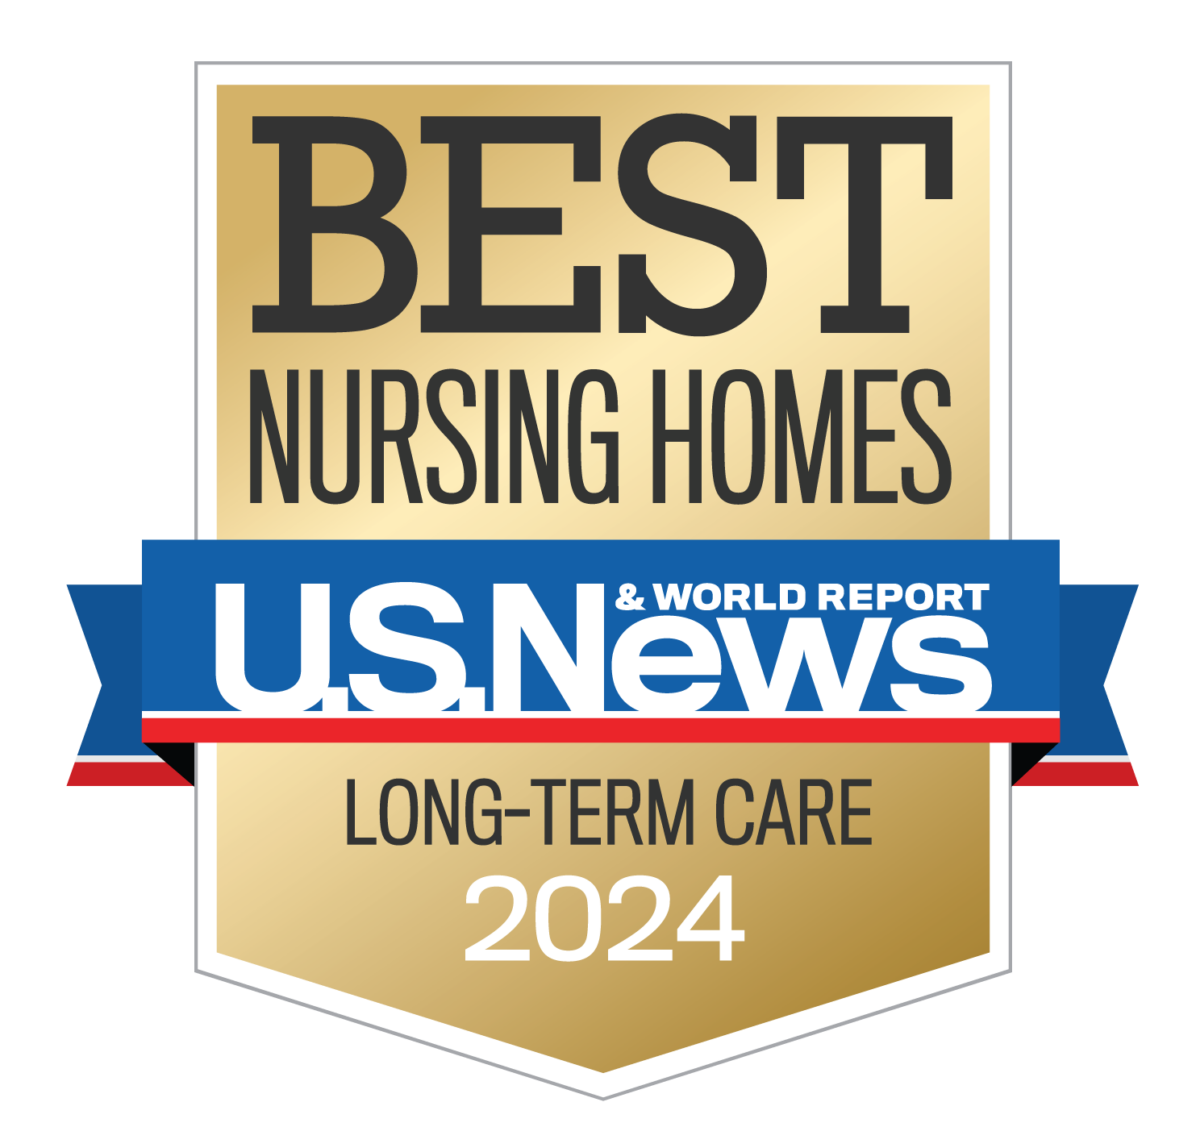 Best Long-Term Care award